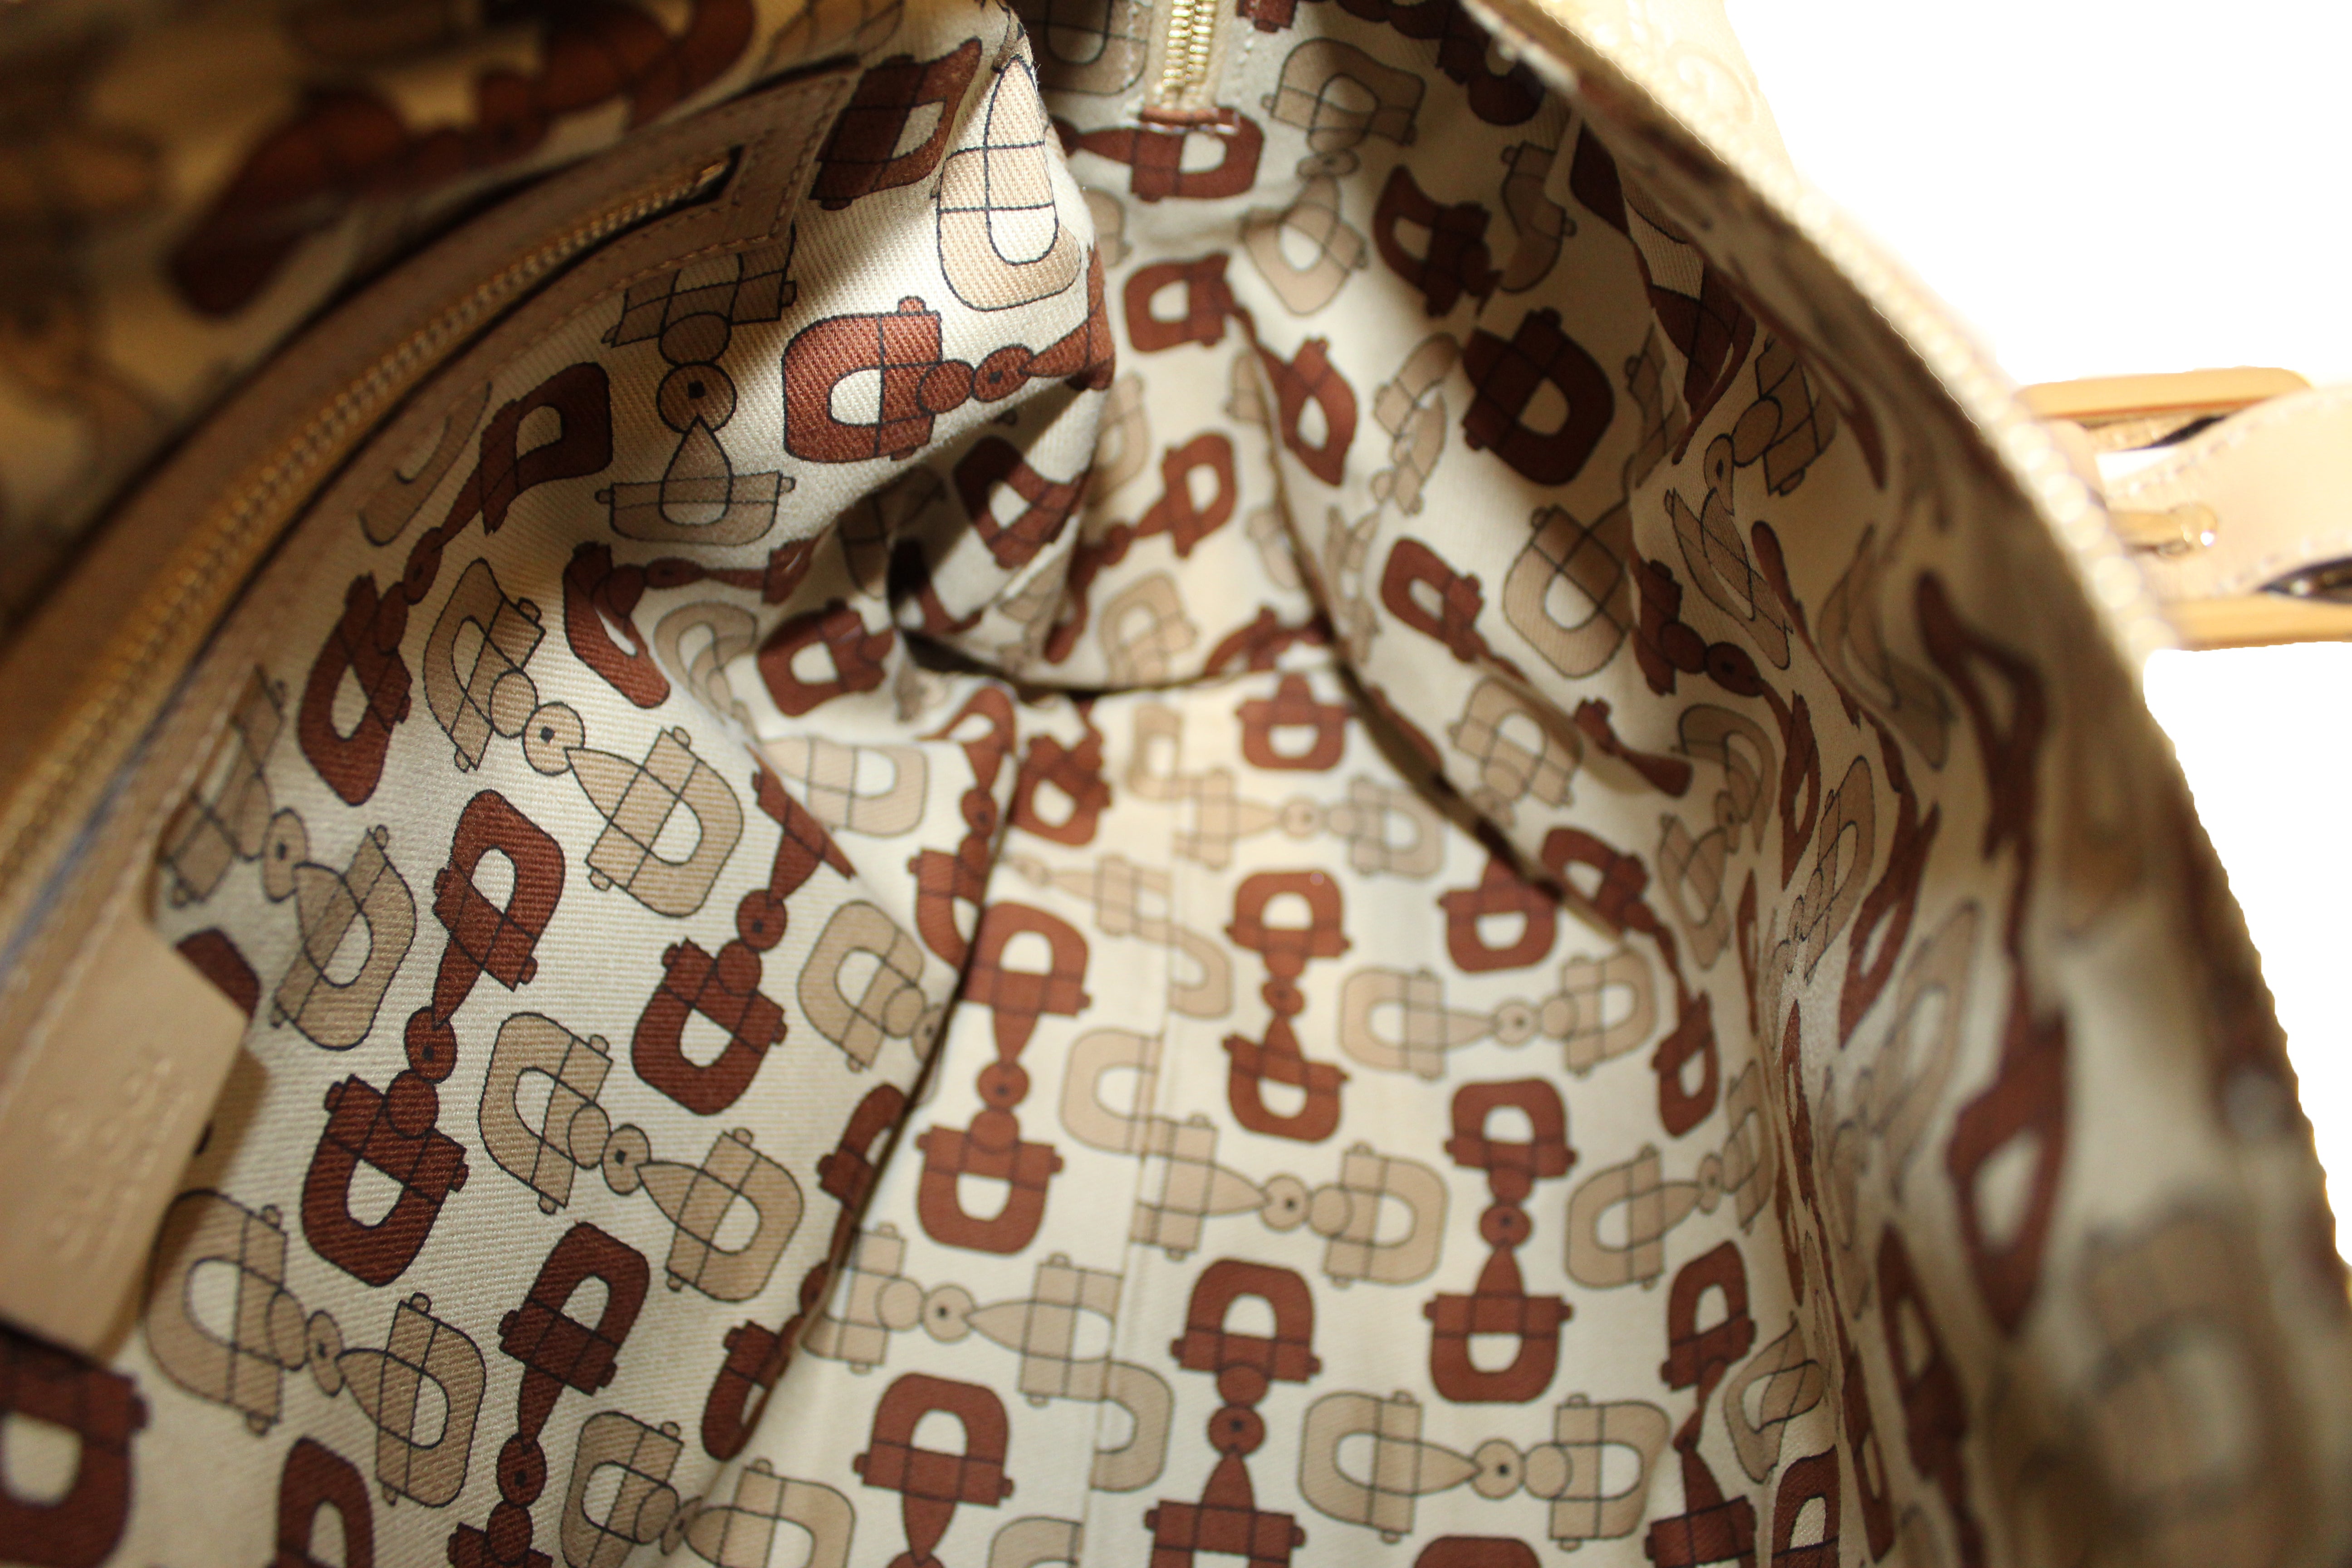 Authentic NEW Gucci Beige Guccissima Leather Medium Britt Boston Bag